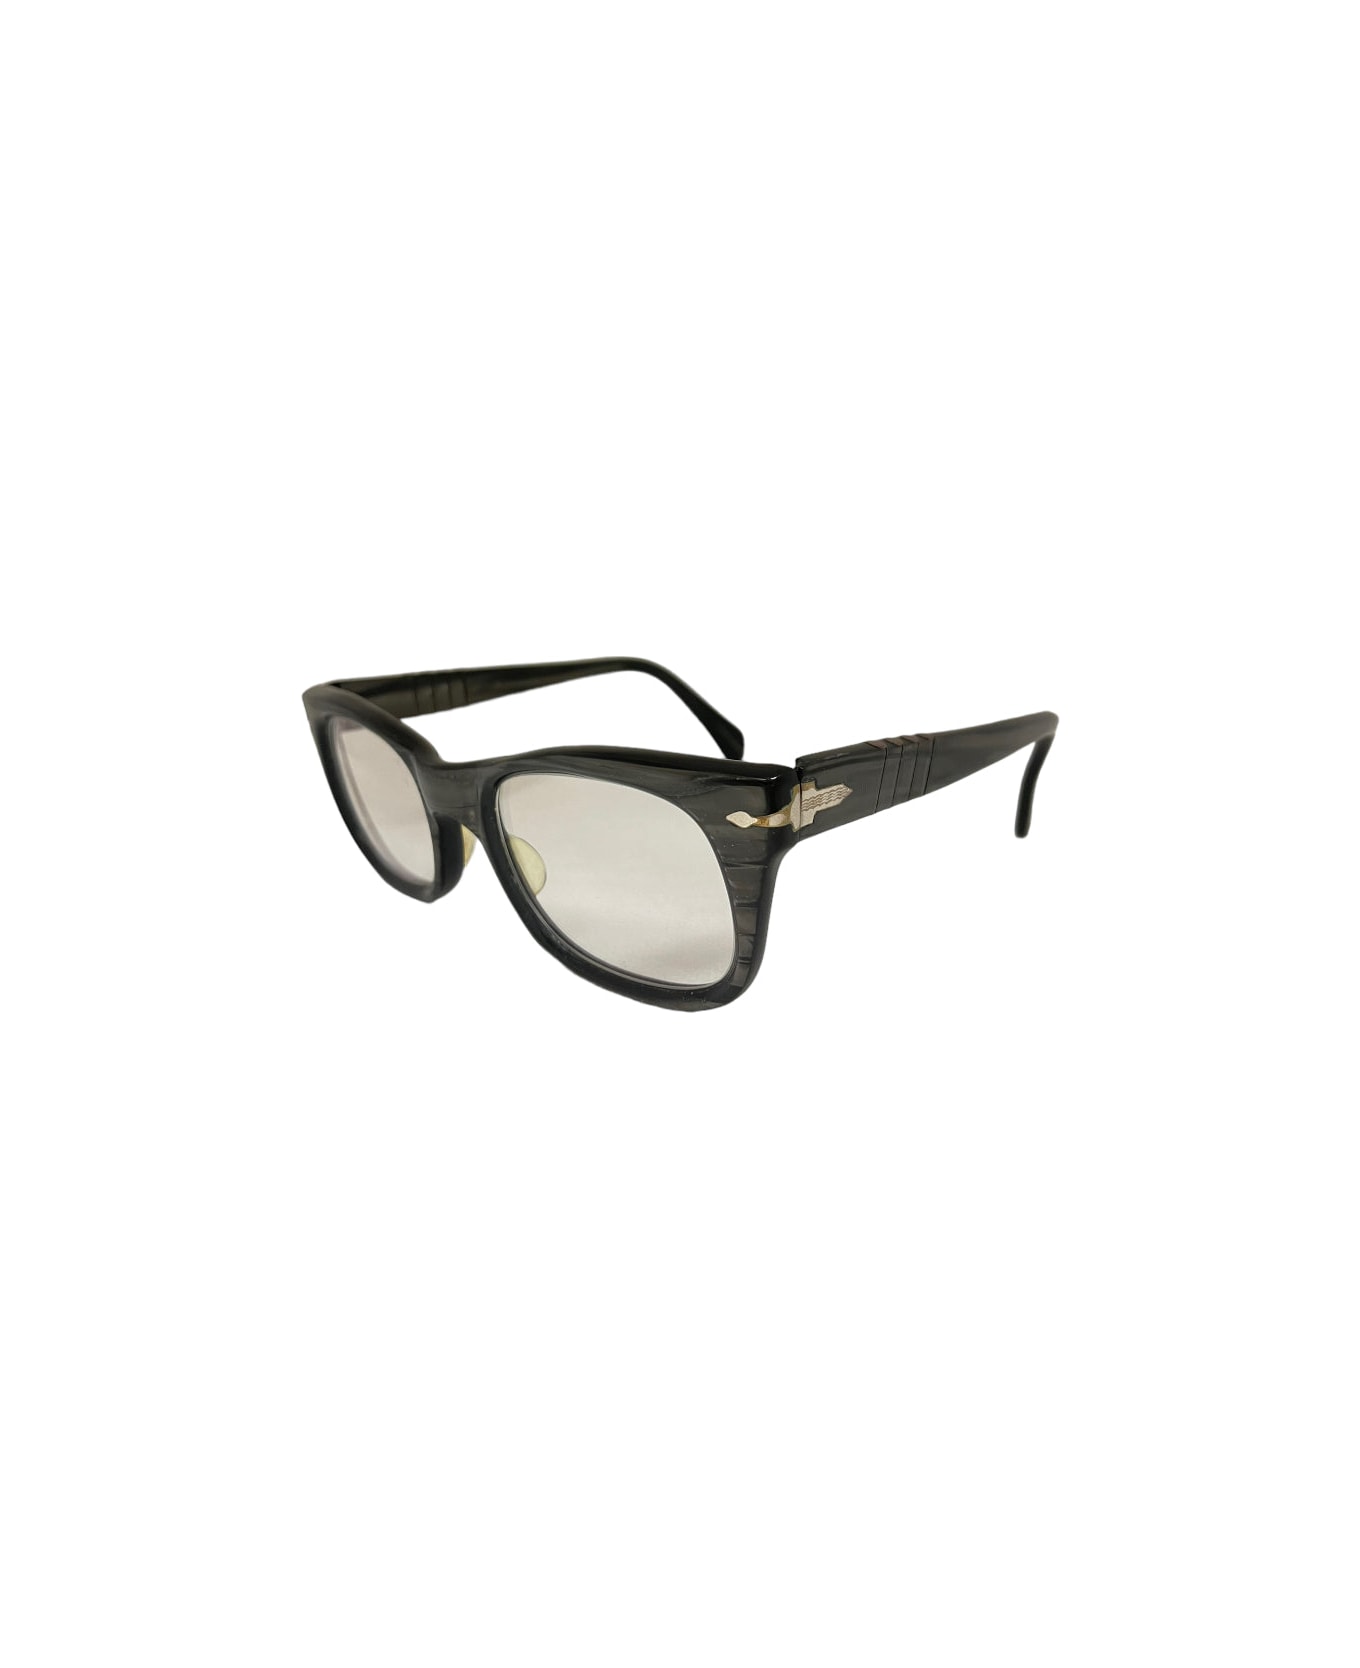 Persol Meflecto - Havana Grey Sunglasses